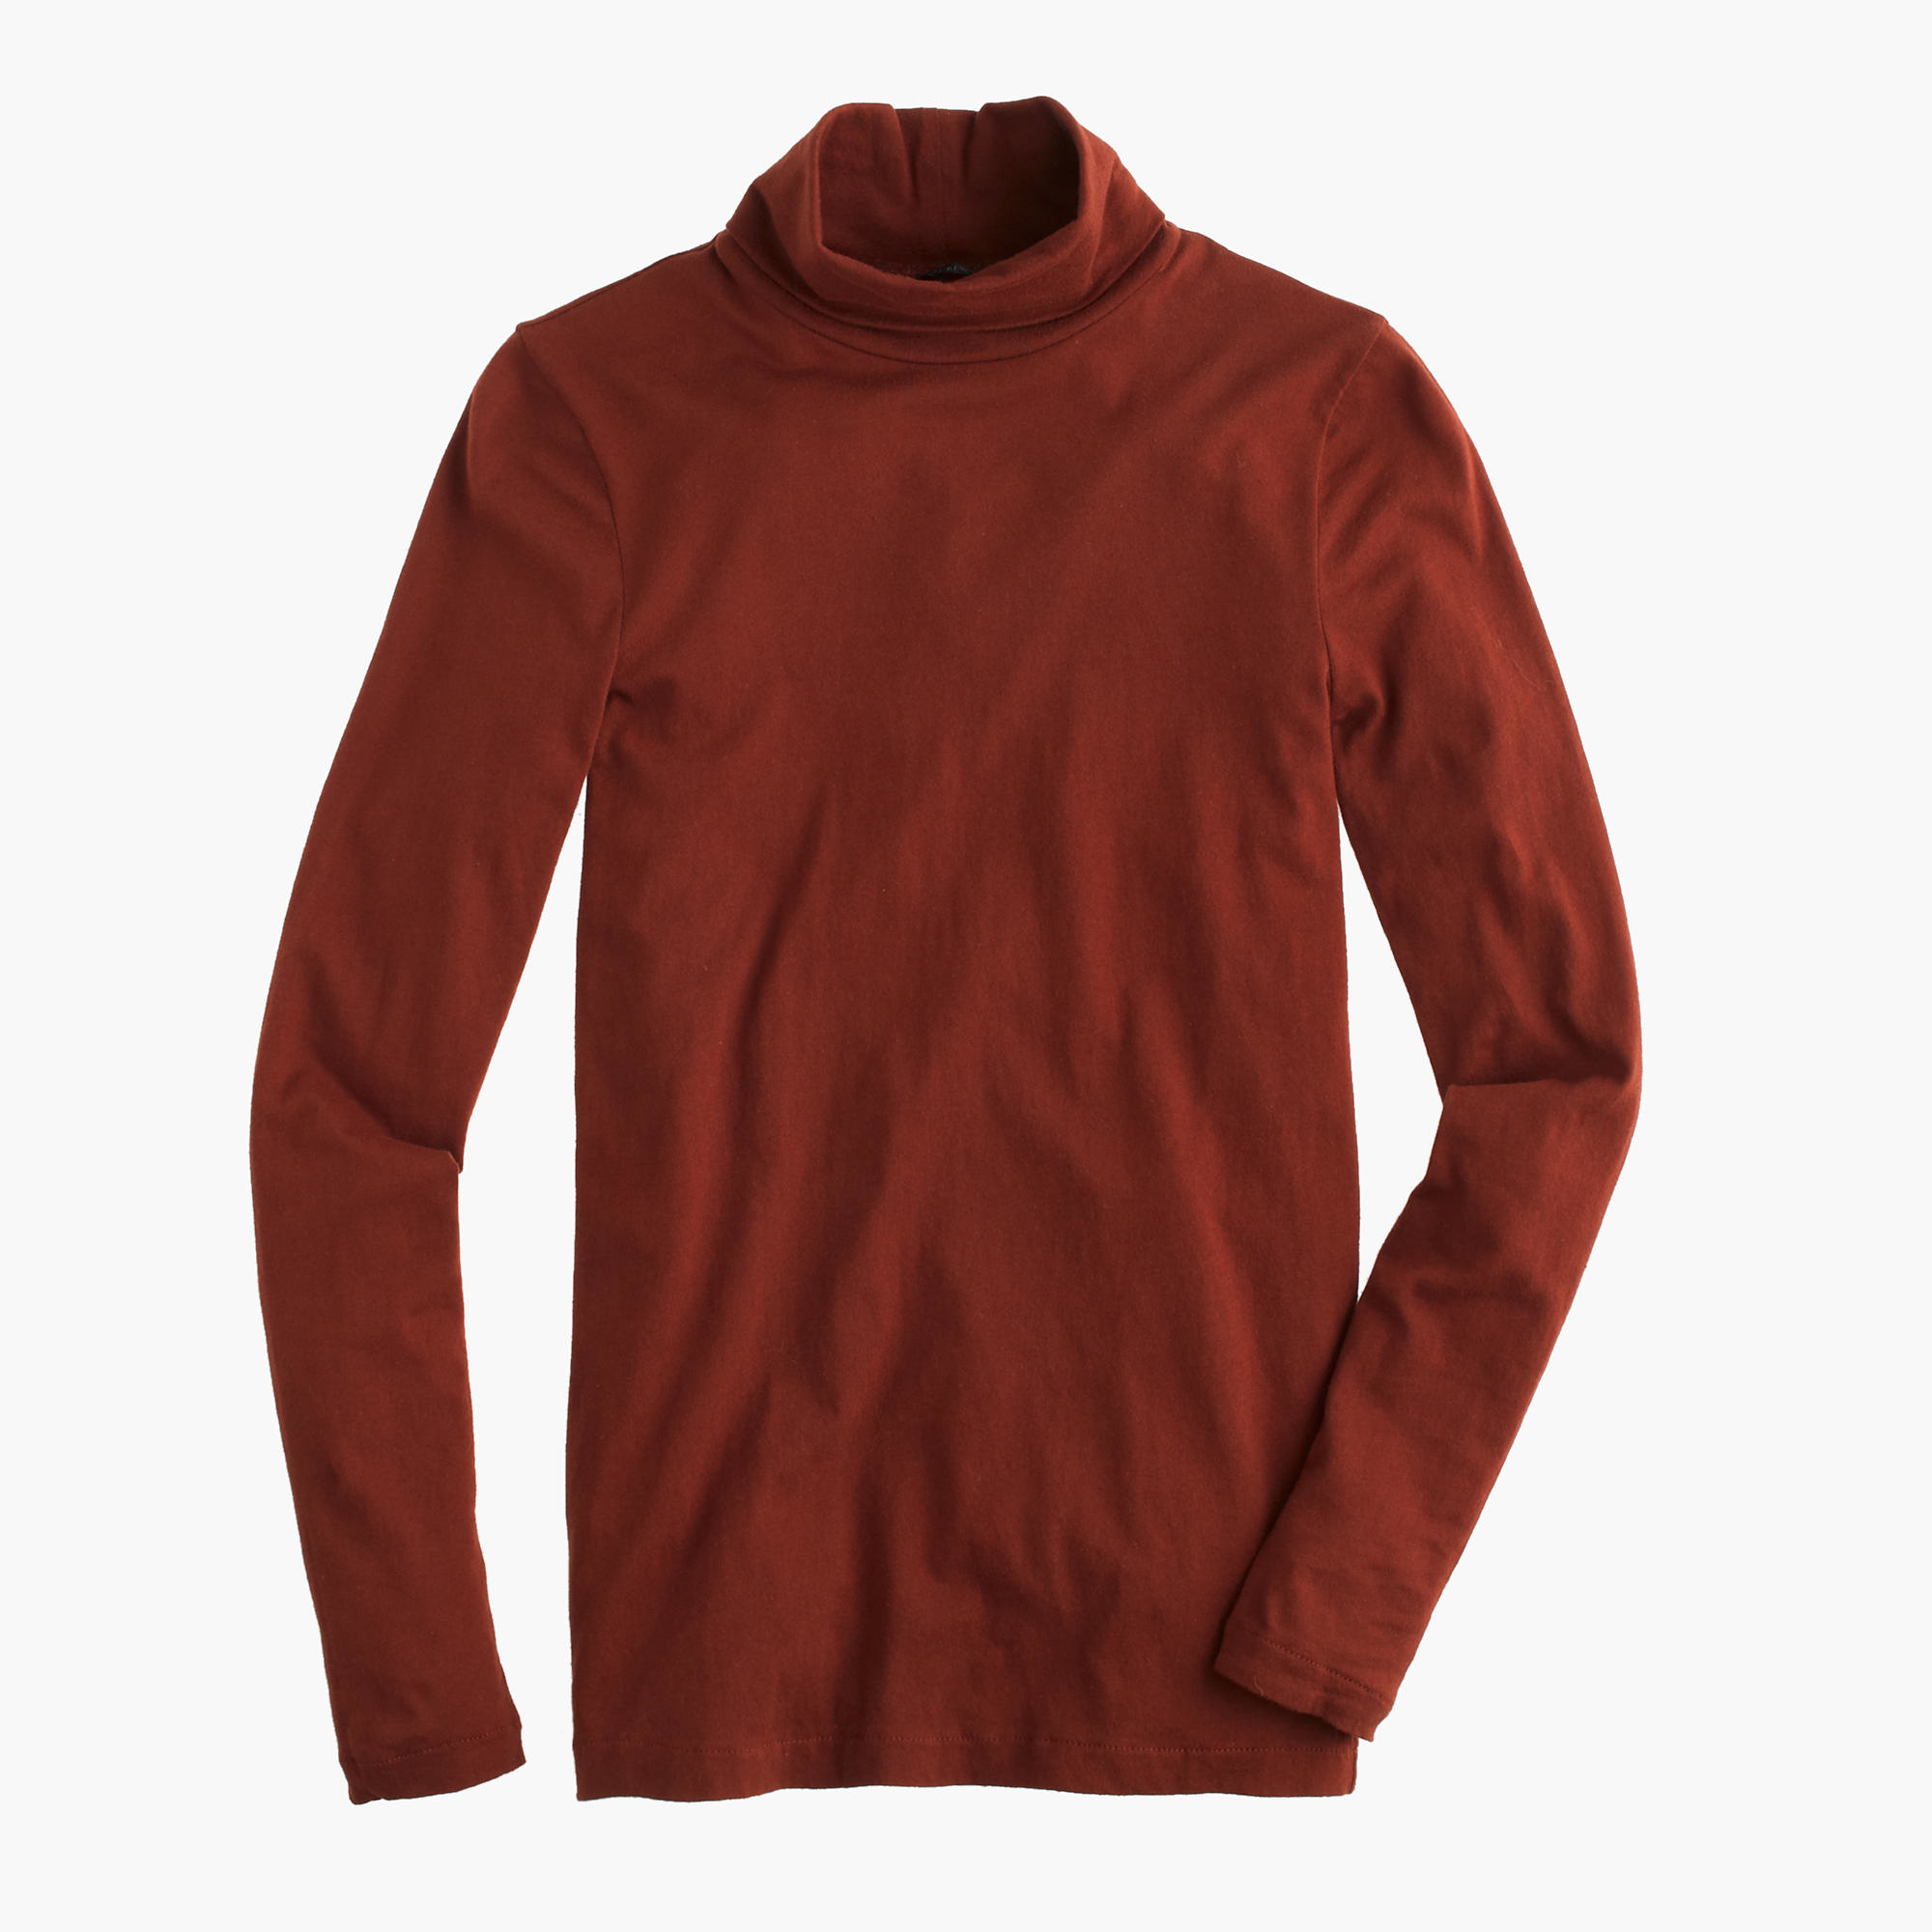 J.crew Tissue Turtleneck T-shirt in Red (deep redwood) | Lyst